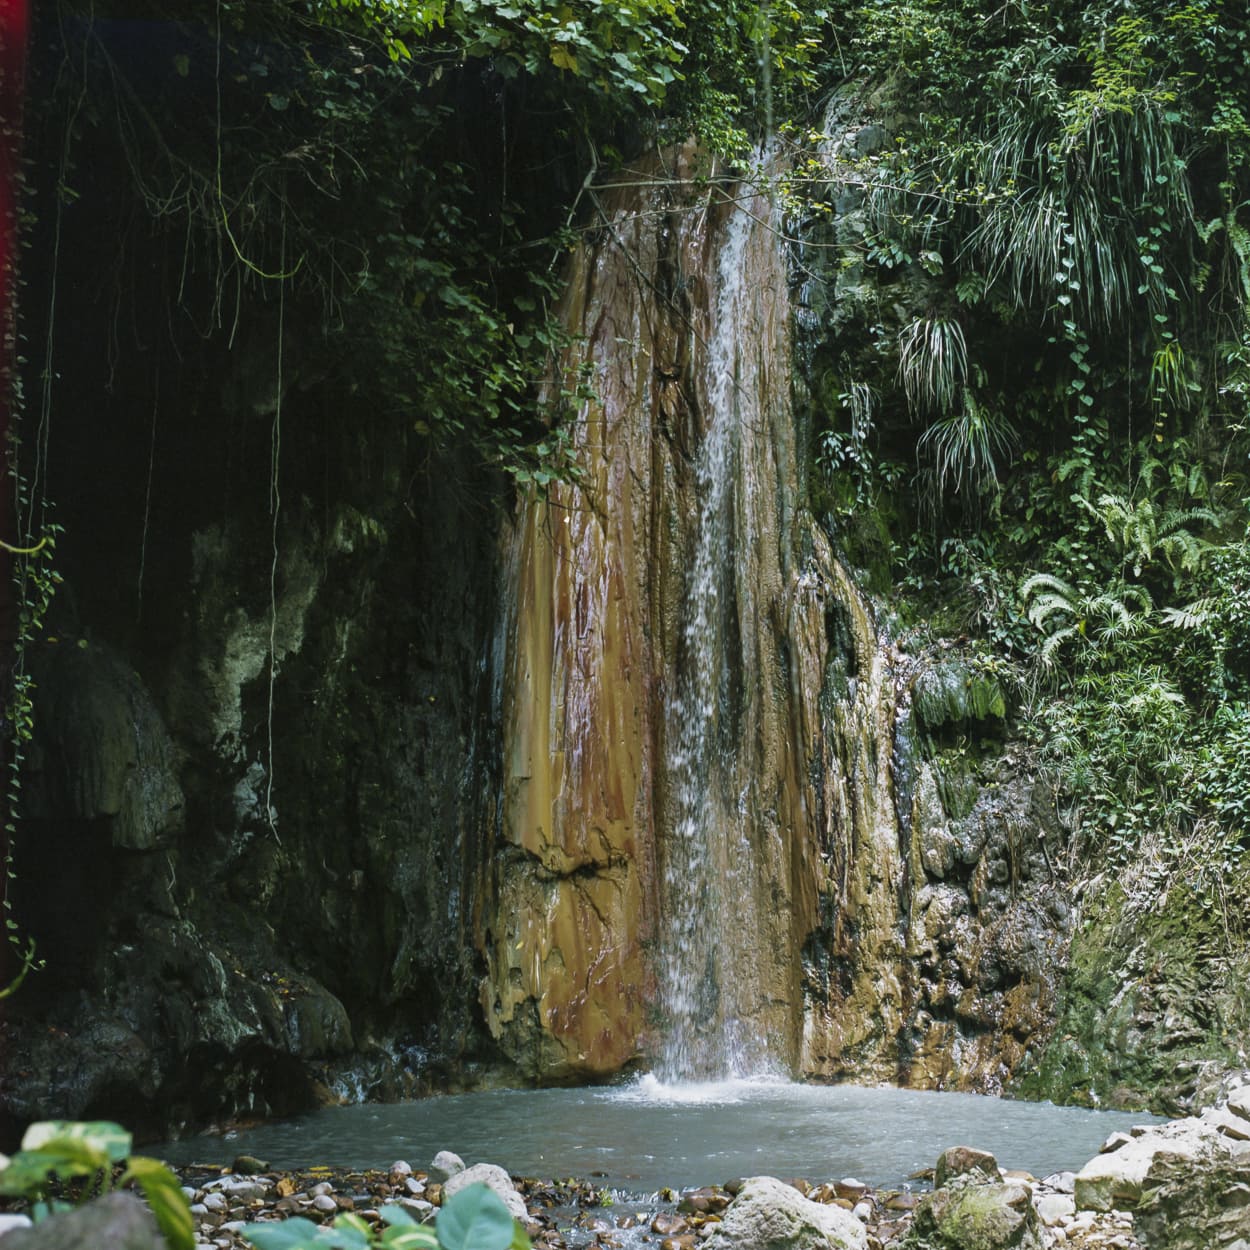 Superman Waterfall in Malgretoute, St. Lucia